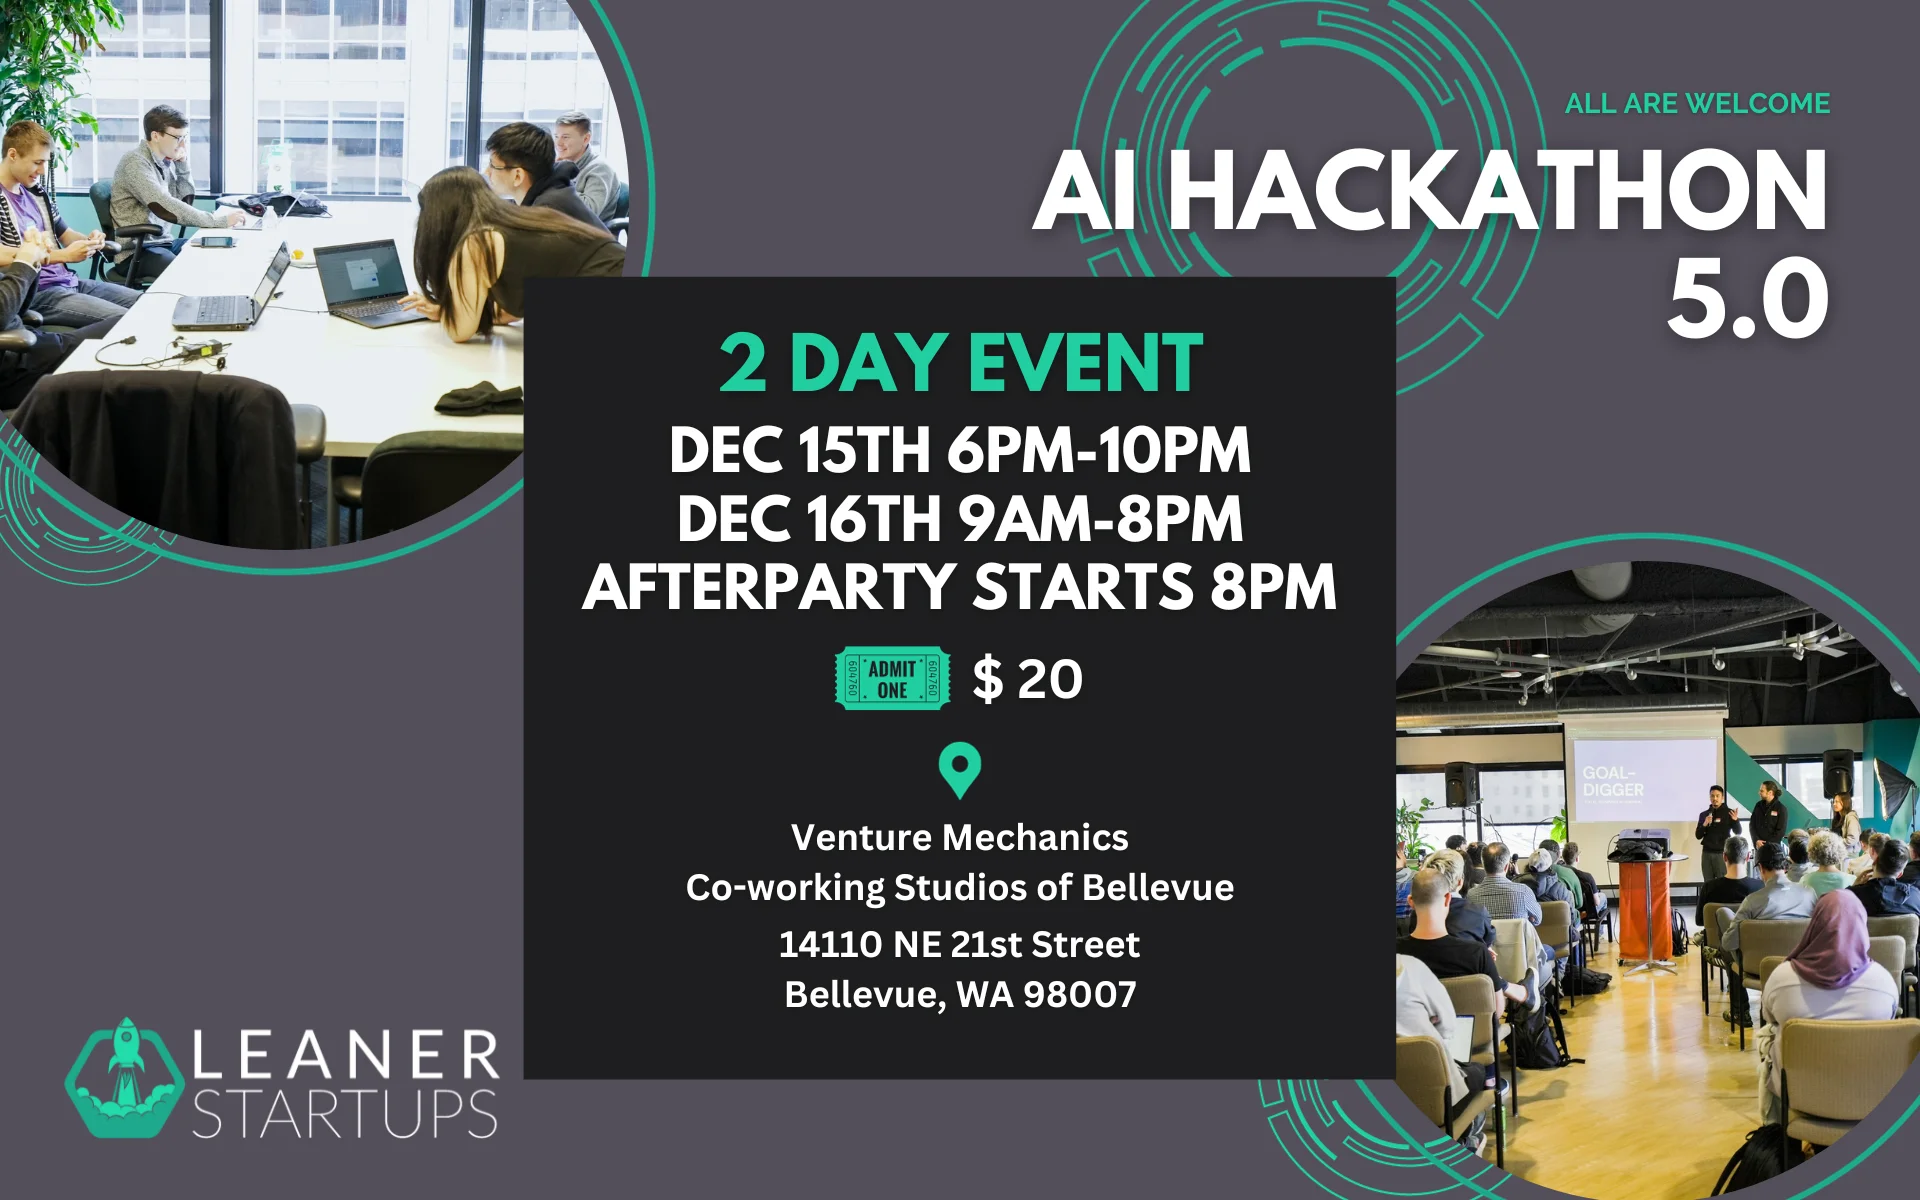 Leaner Startups AI Hackathon 5.0 at Venture Mechanics Co-working Studios of Bellevue Event Image